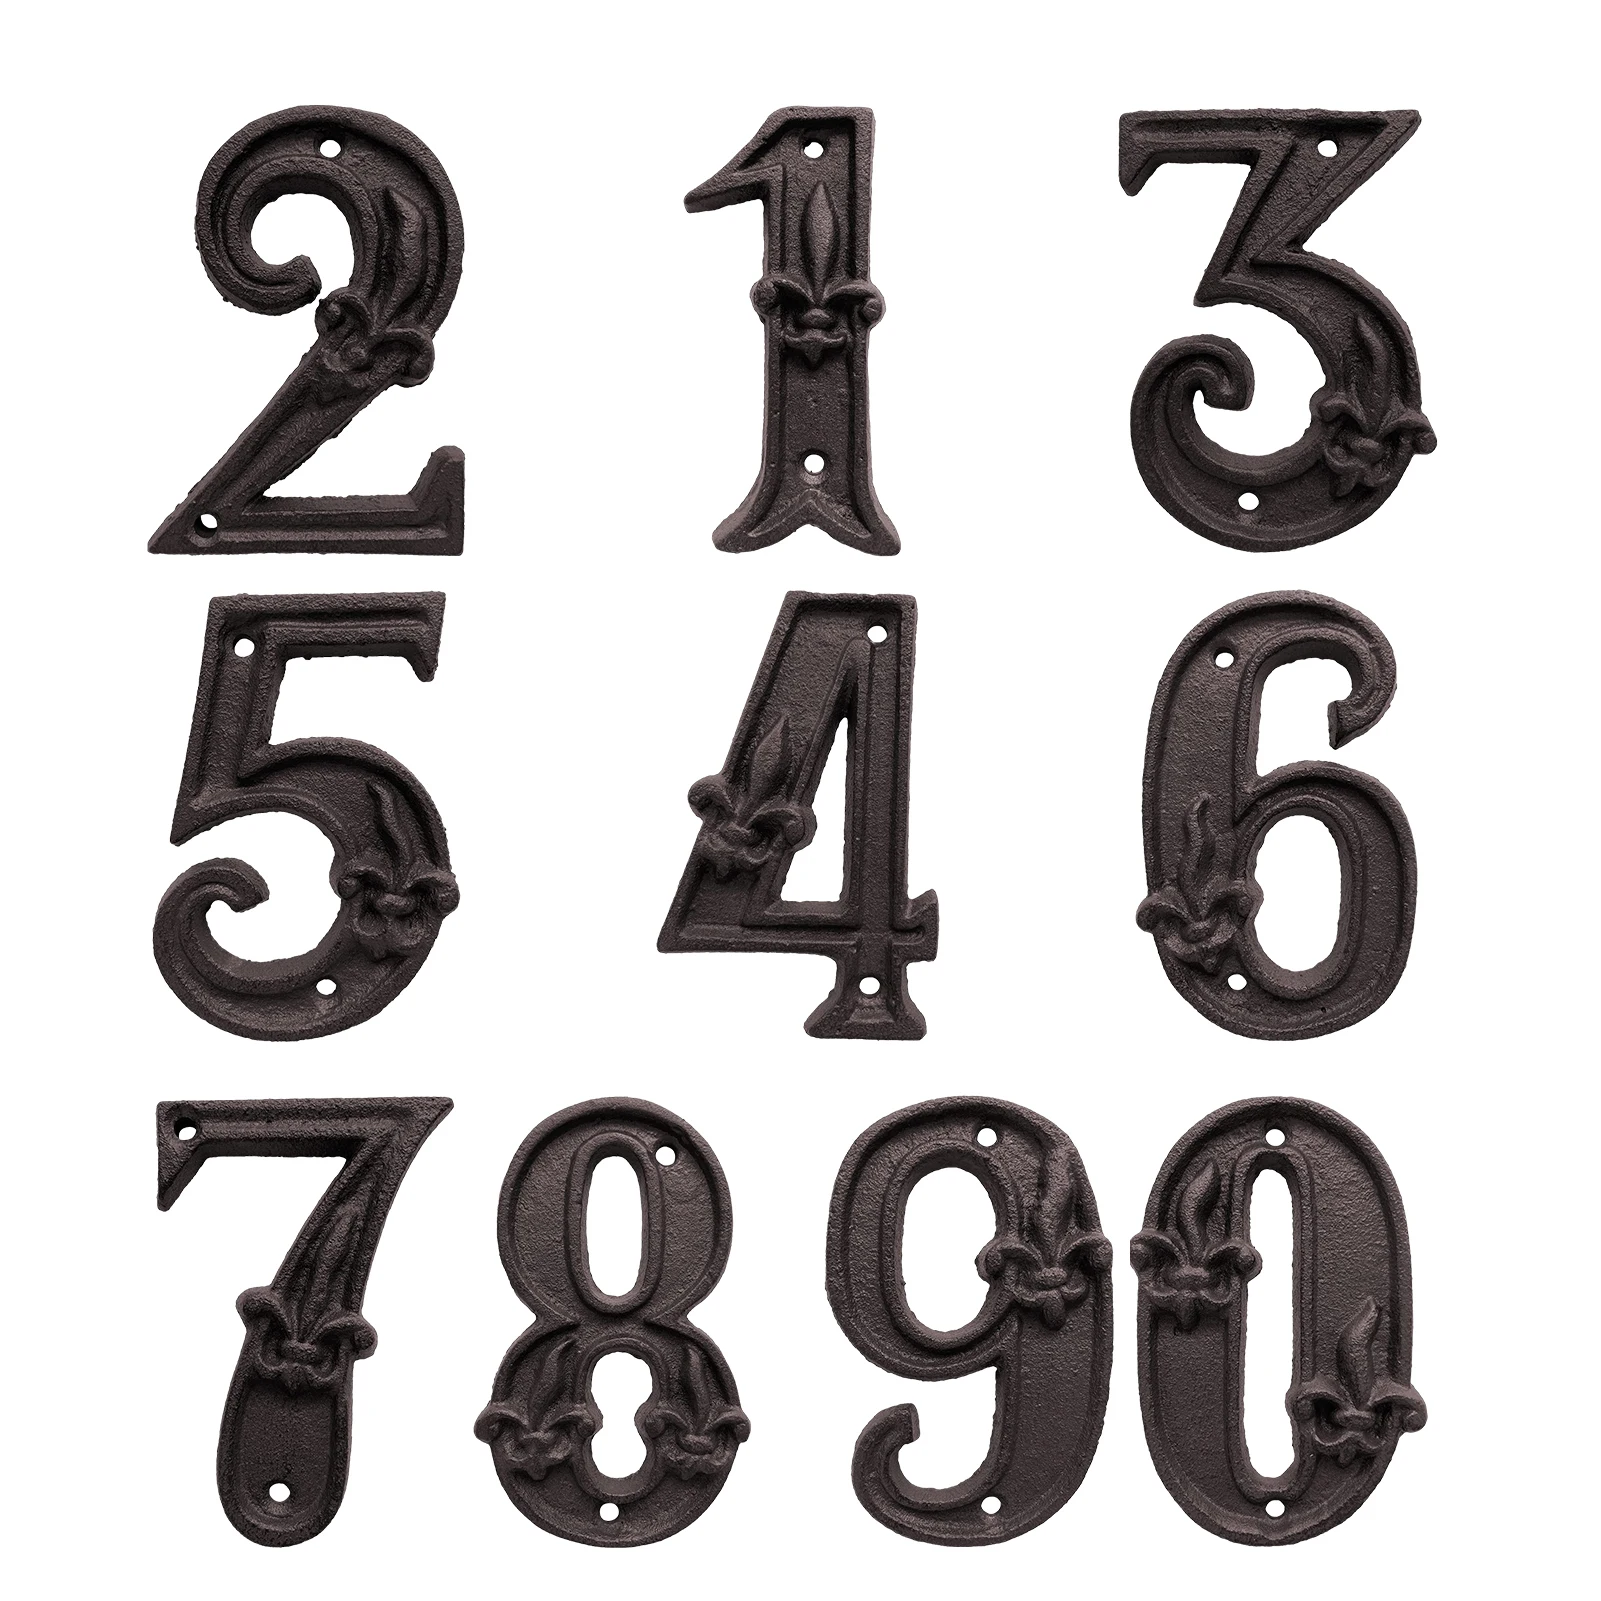 

Unique House Number Cast Iron Metal Antique Doorplate Address Numbers Apartment Street Address Plaque Decor Imaginative